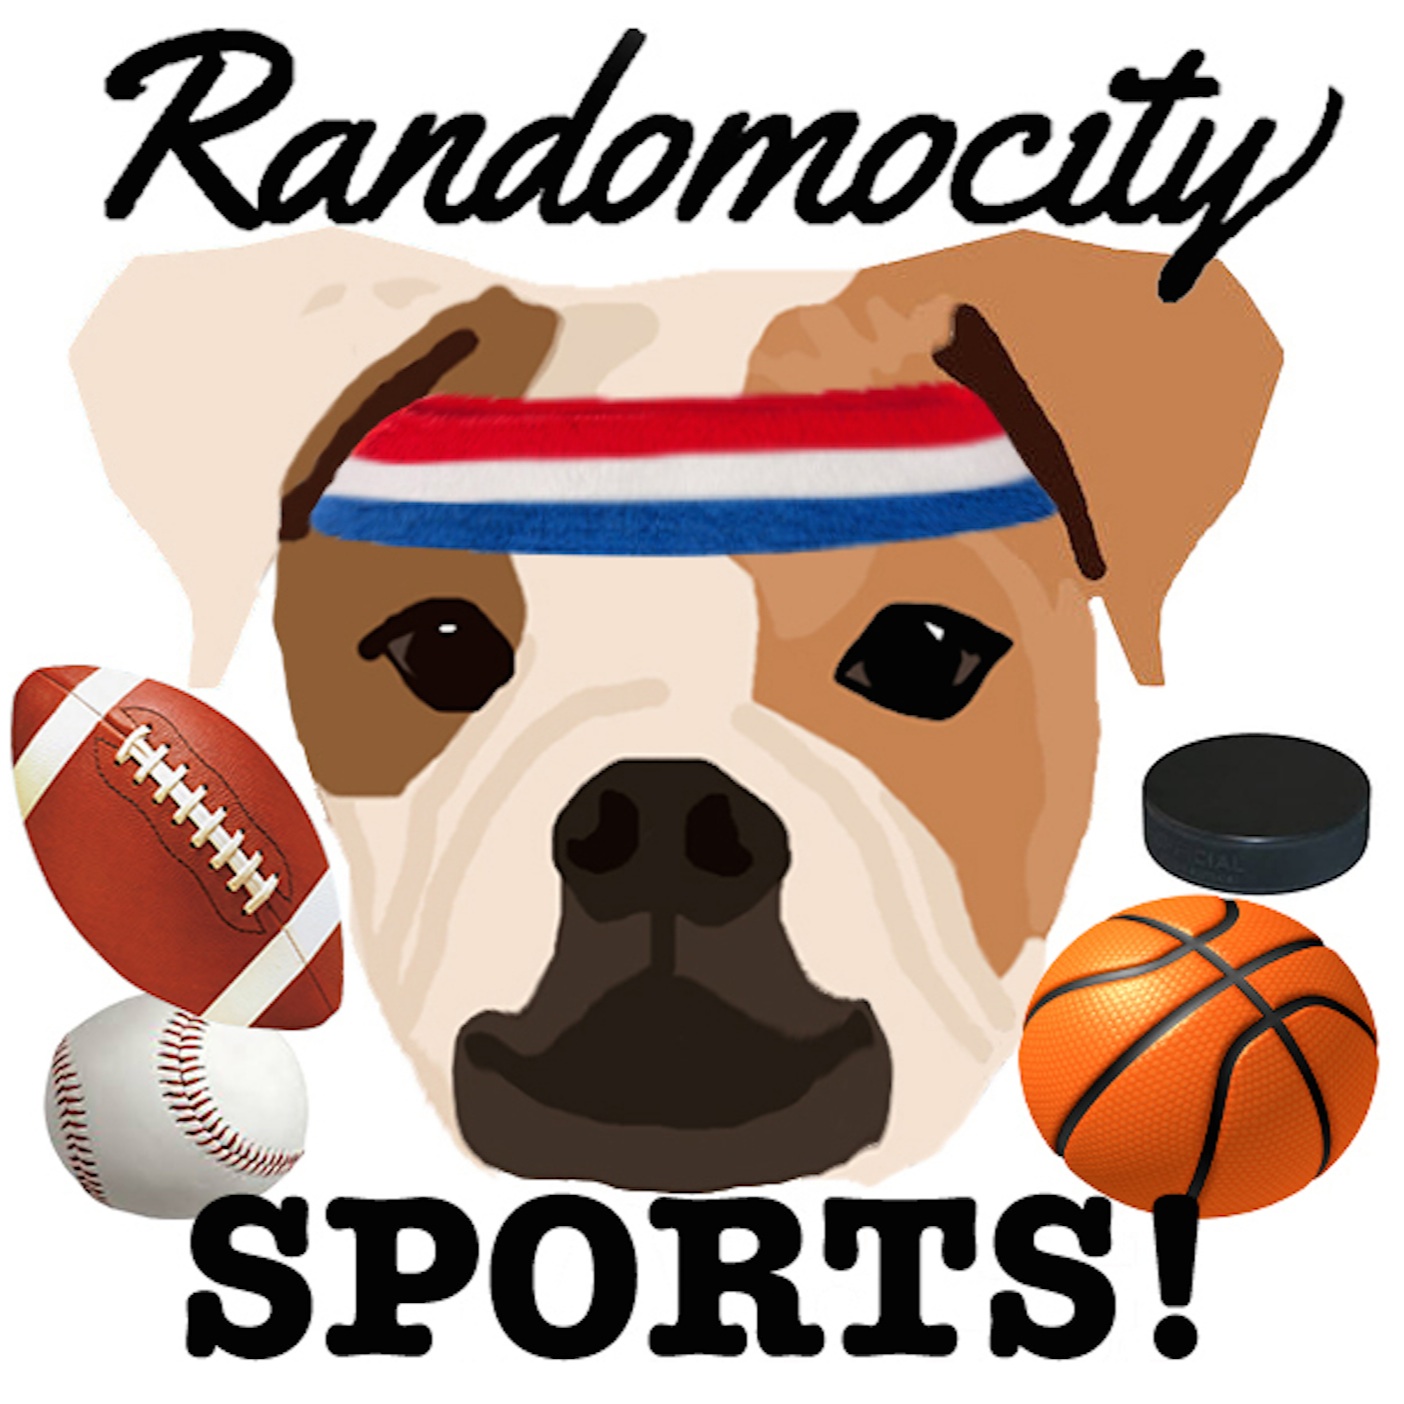 Randomocity Sports